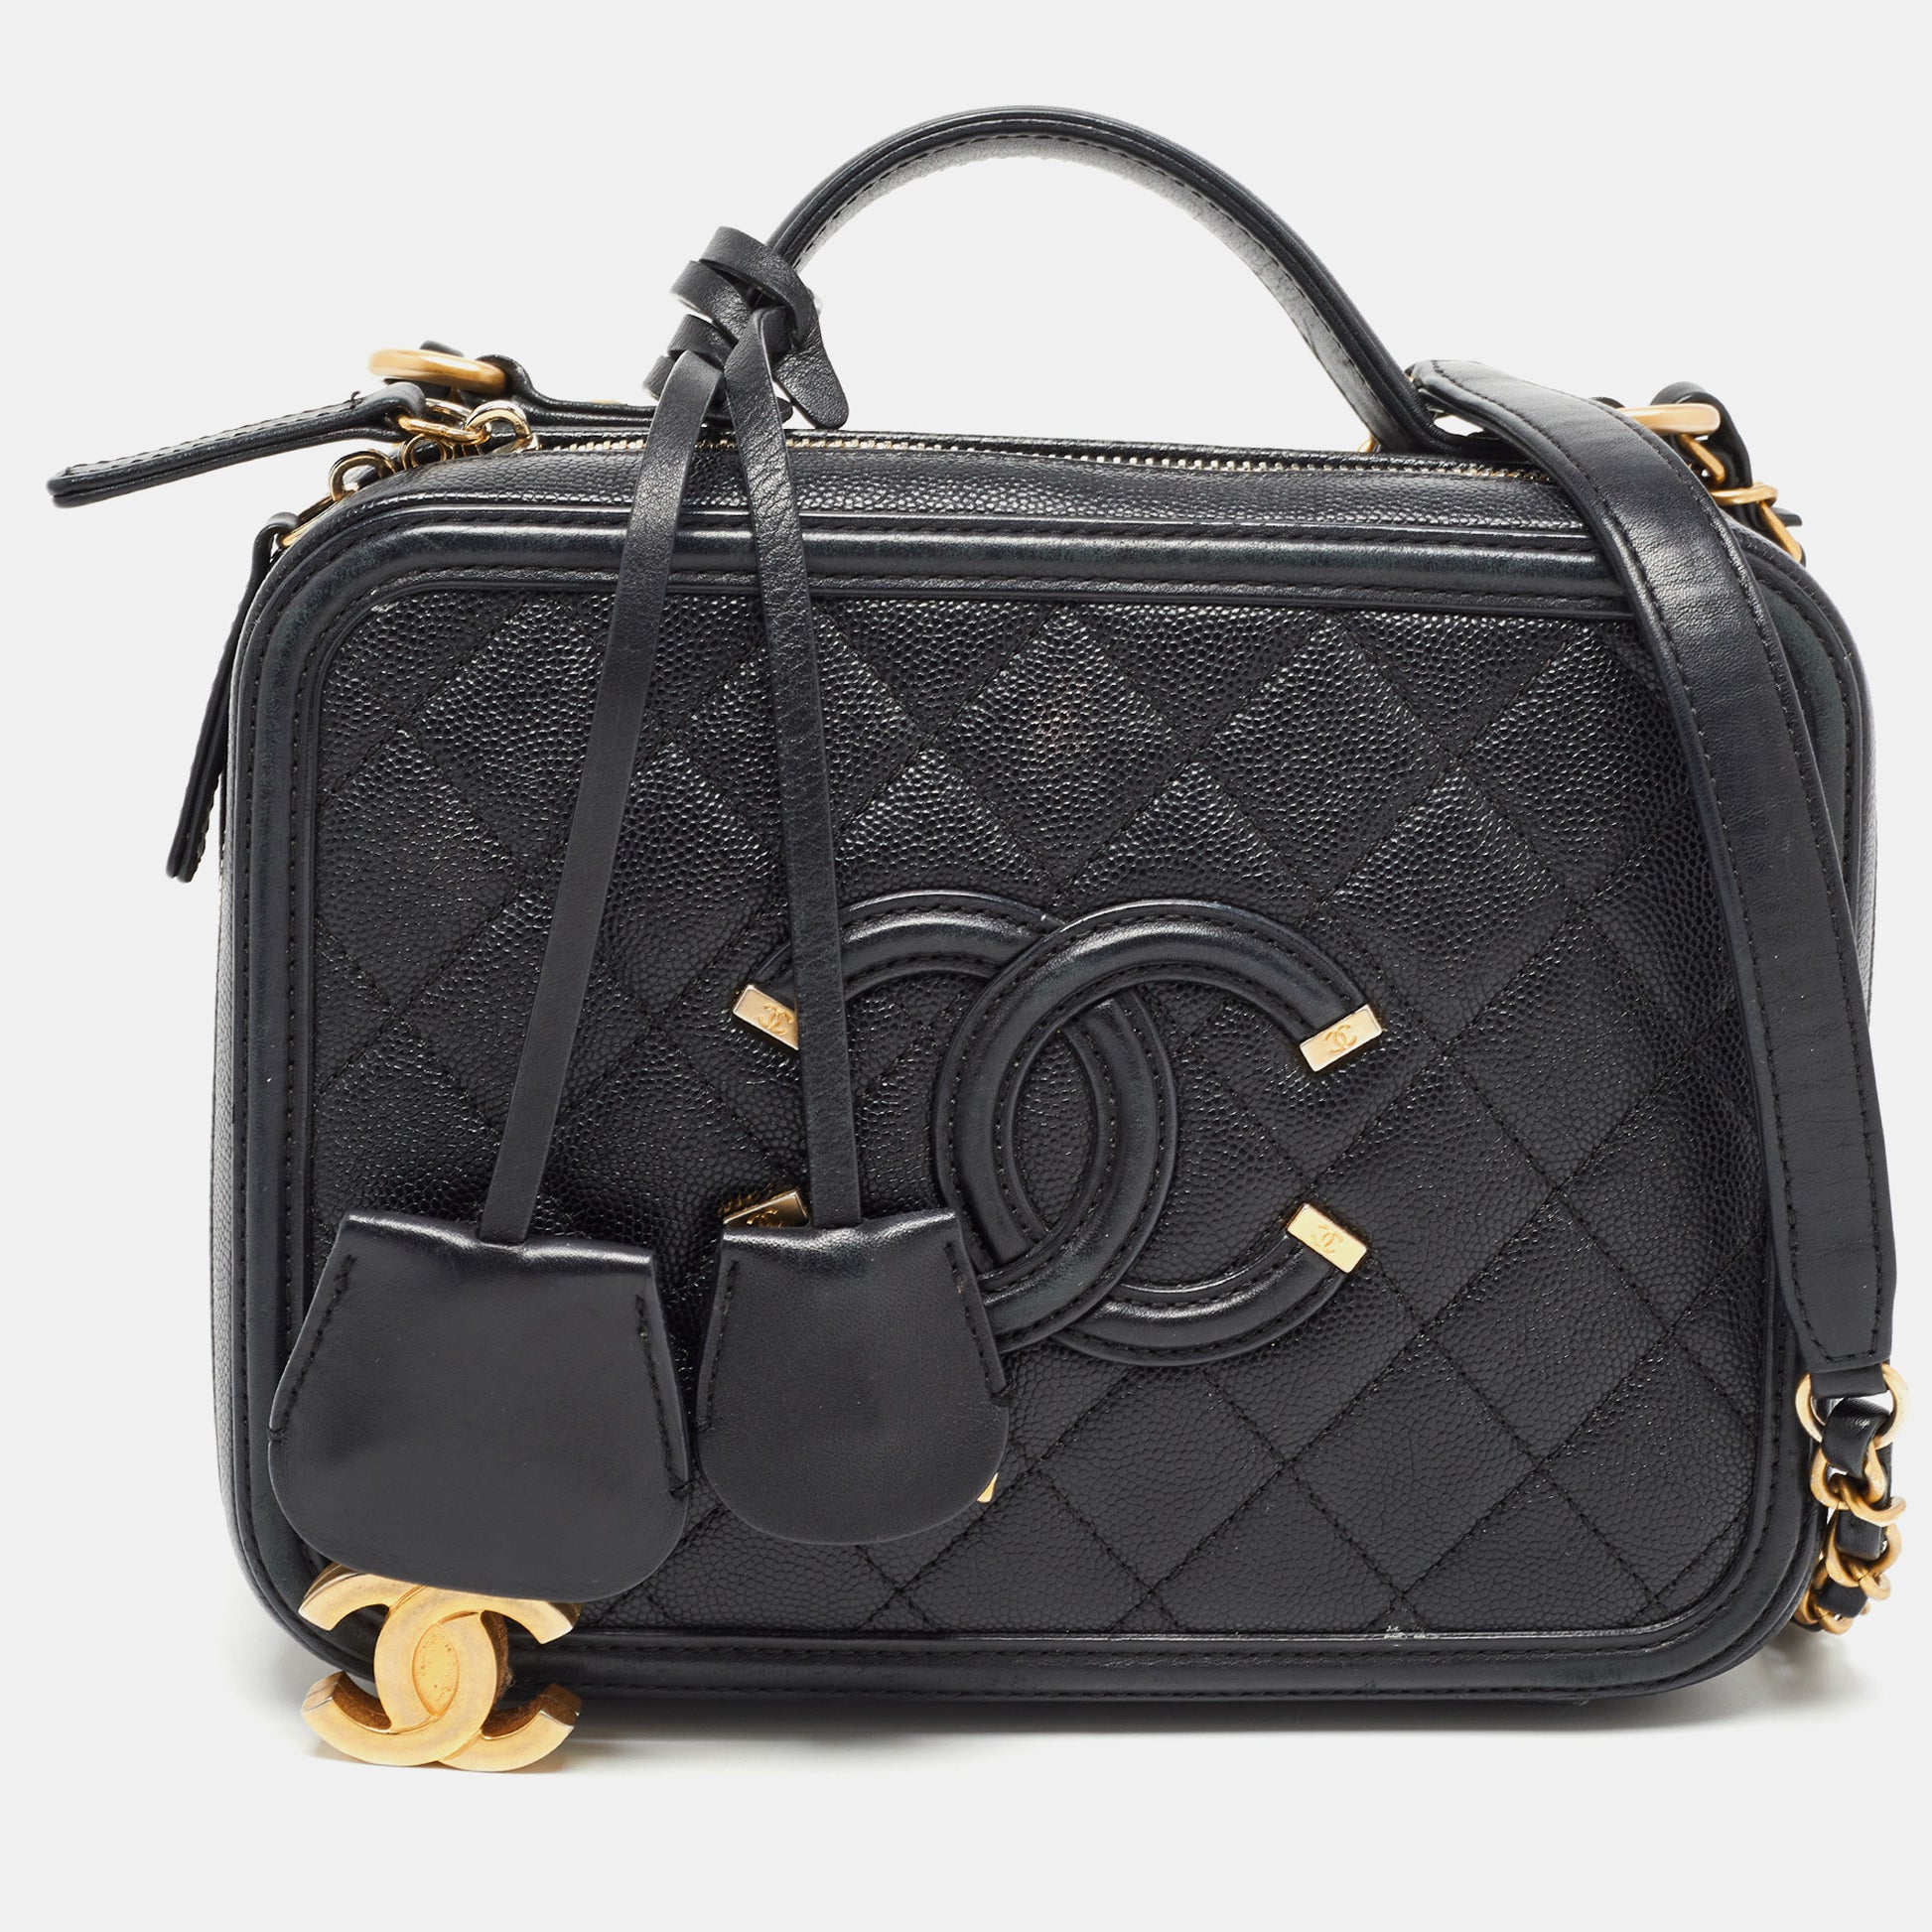 CHANEL, Bags, Chanel Caviar Vanity Filigree Medium Cc Case